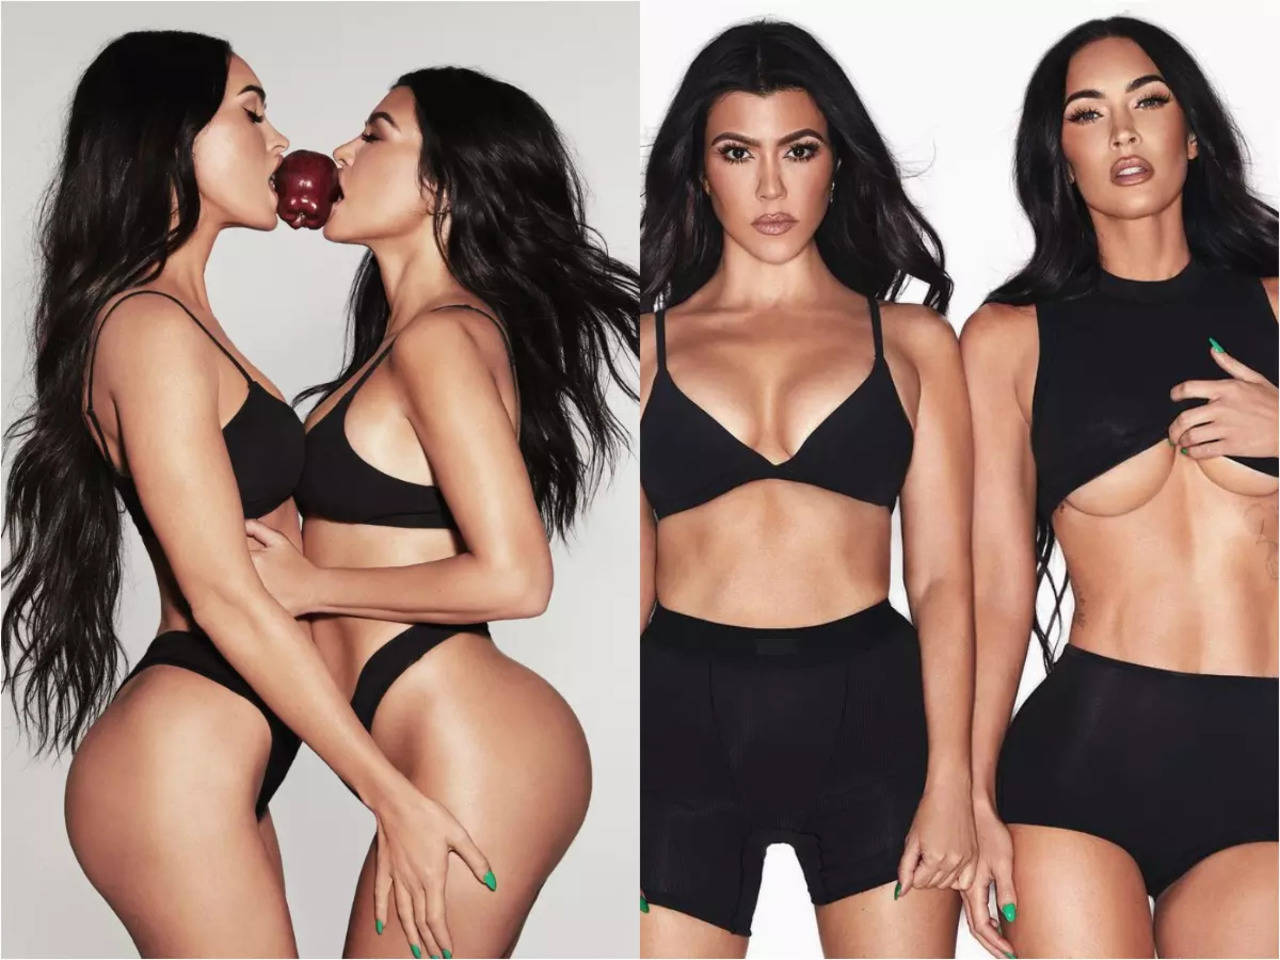 Megan Fox and Kourtney Kardashian strip in a provocative campaign for Kim Kardashian pic